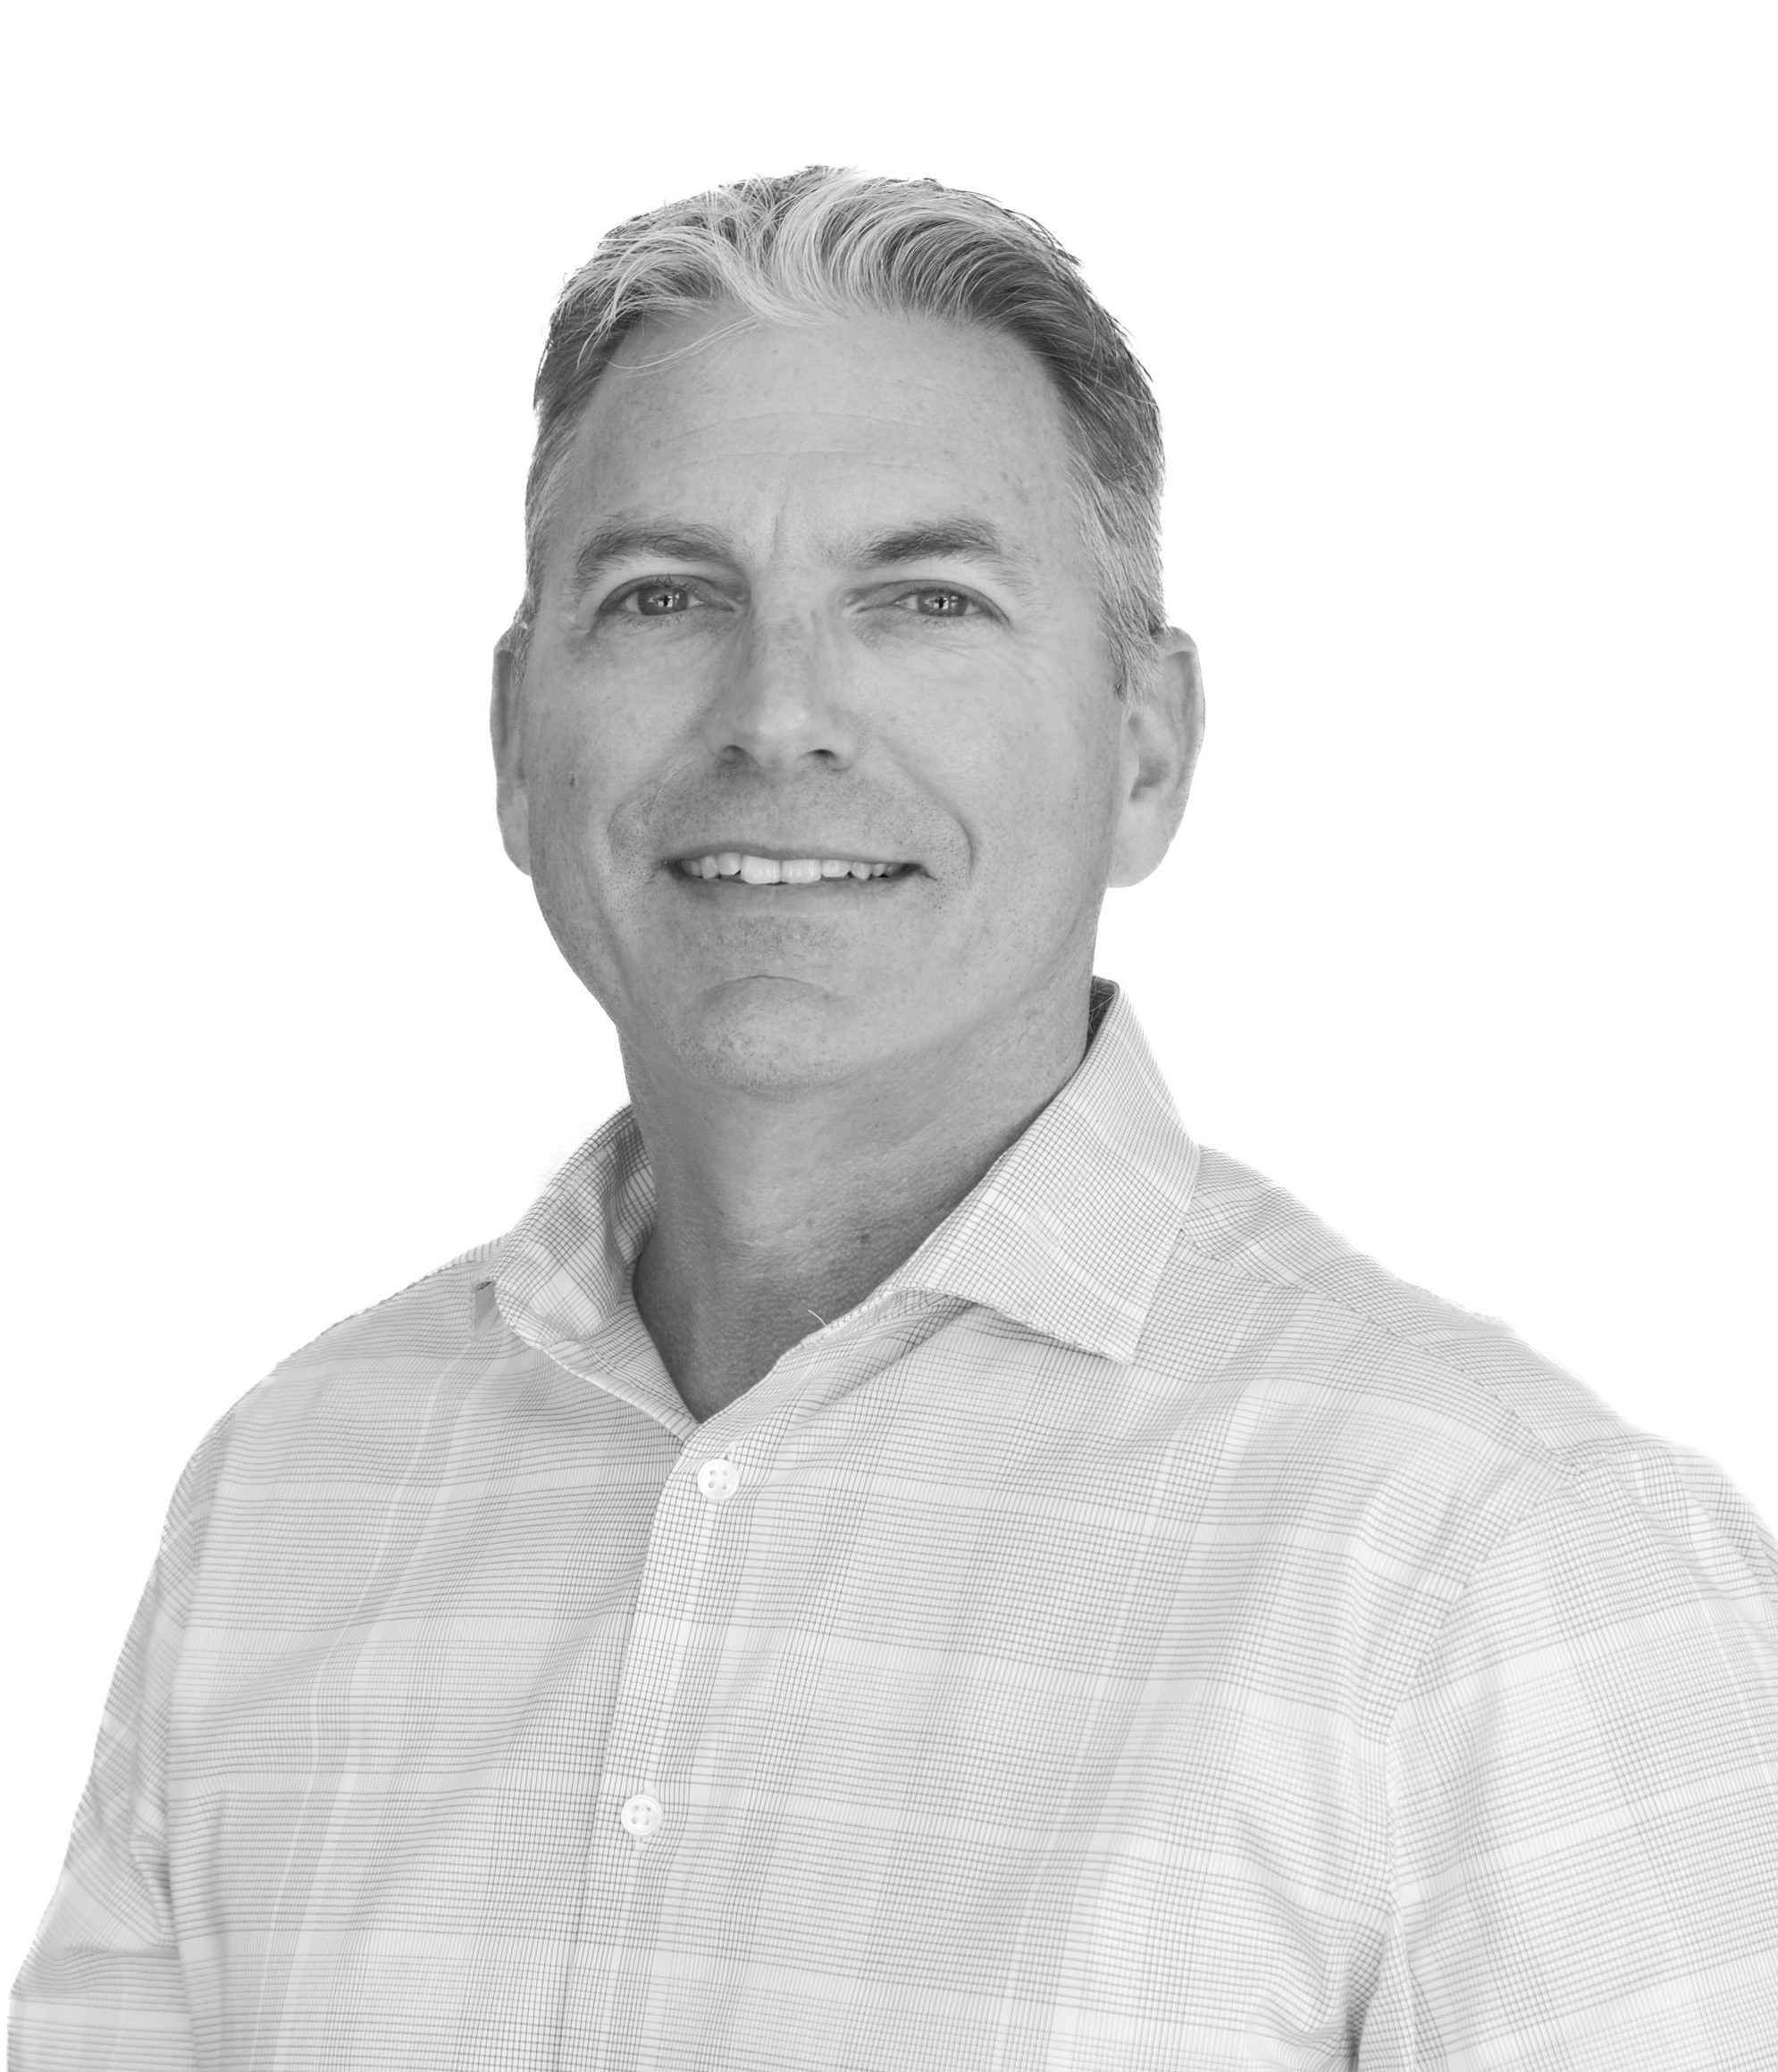 AGNORA Announces new CEO, Corey Boland